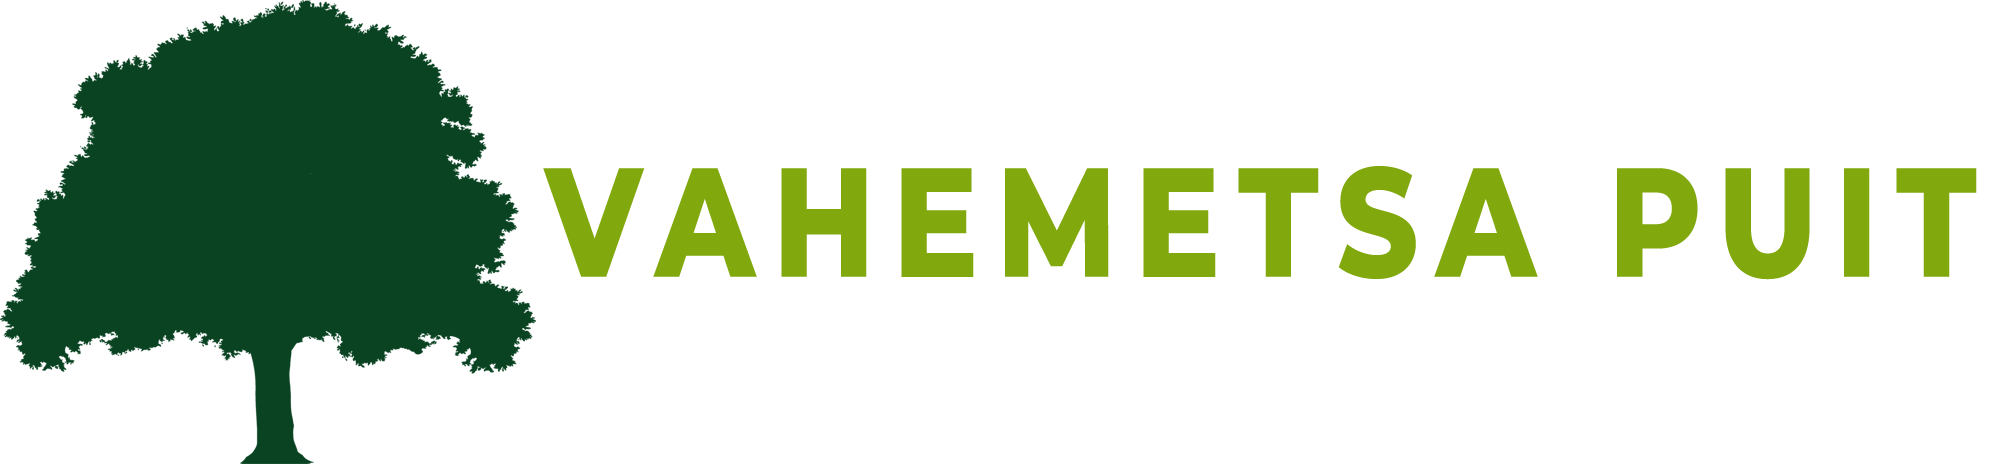 Vahemetsa_logo2